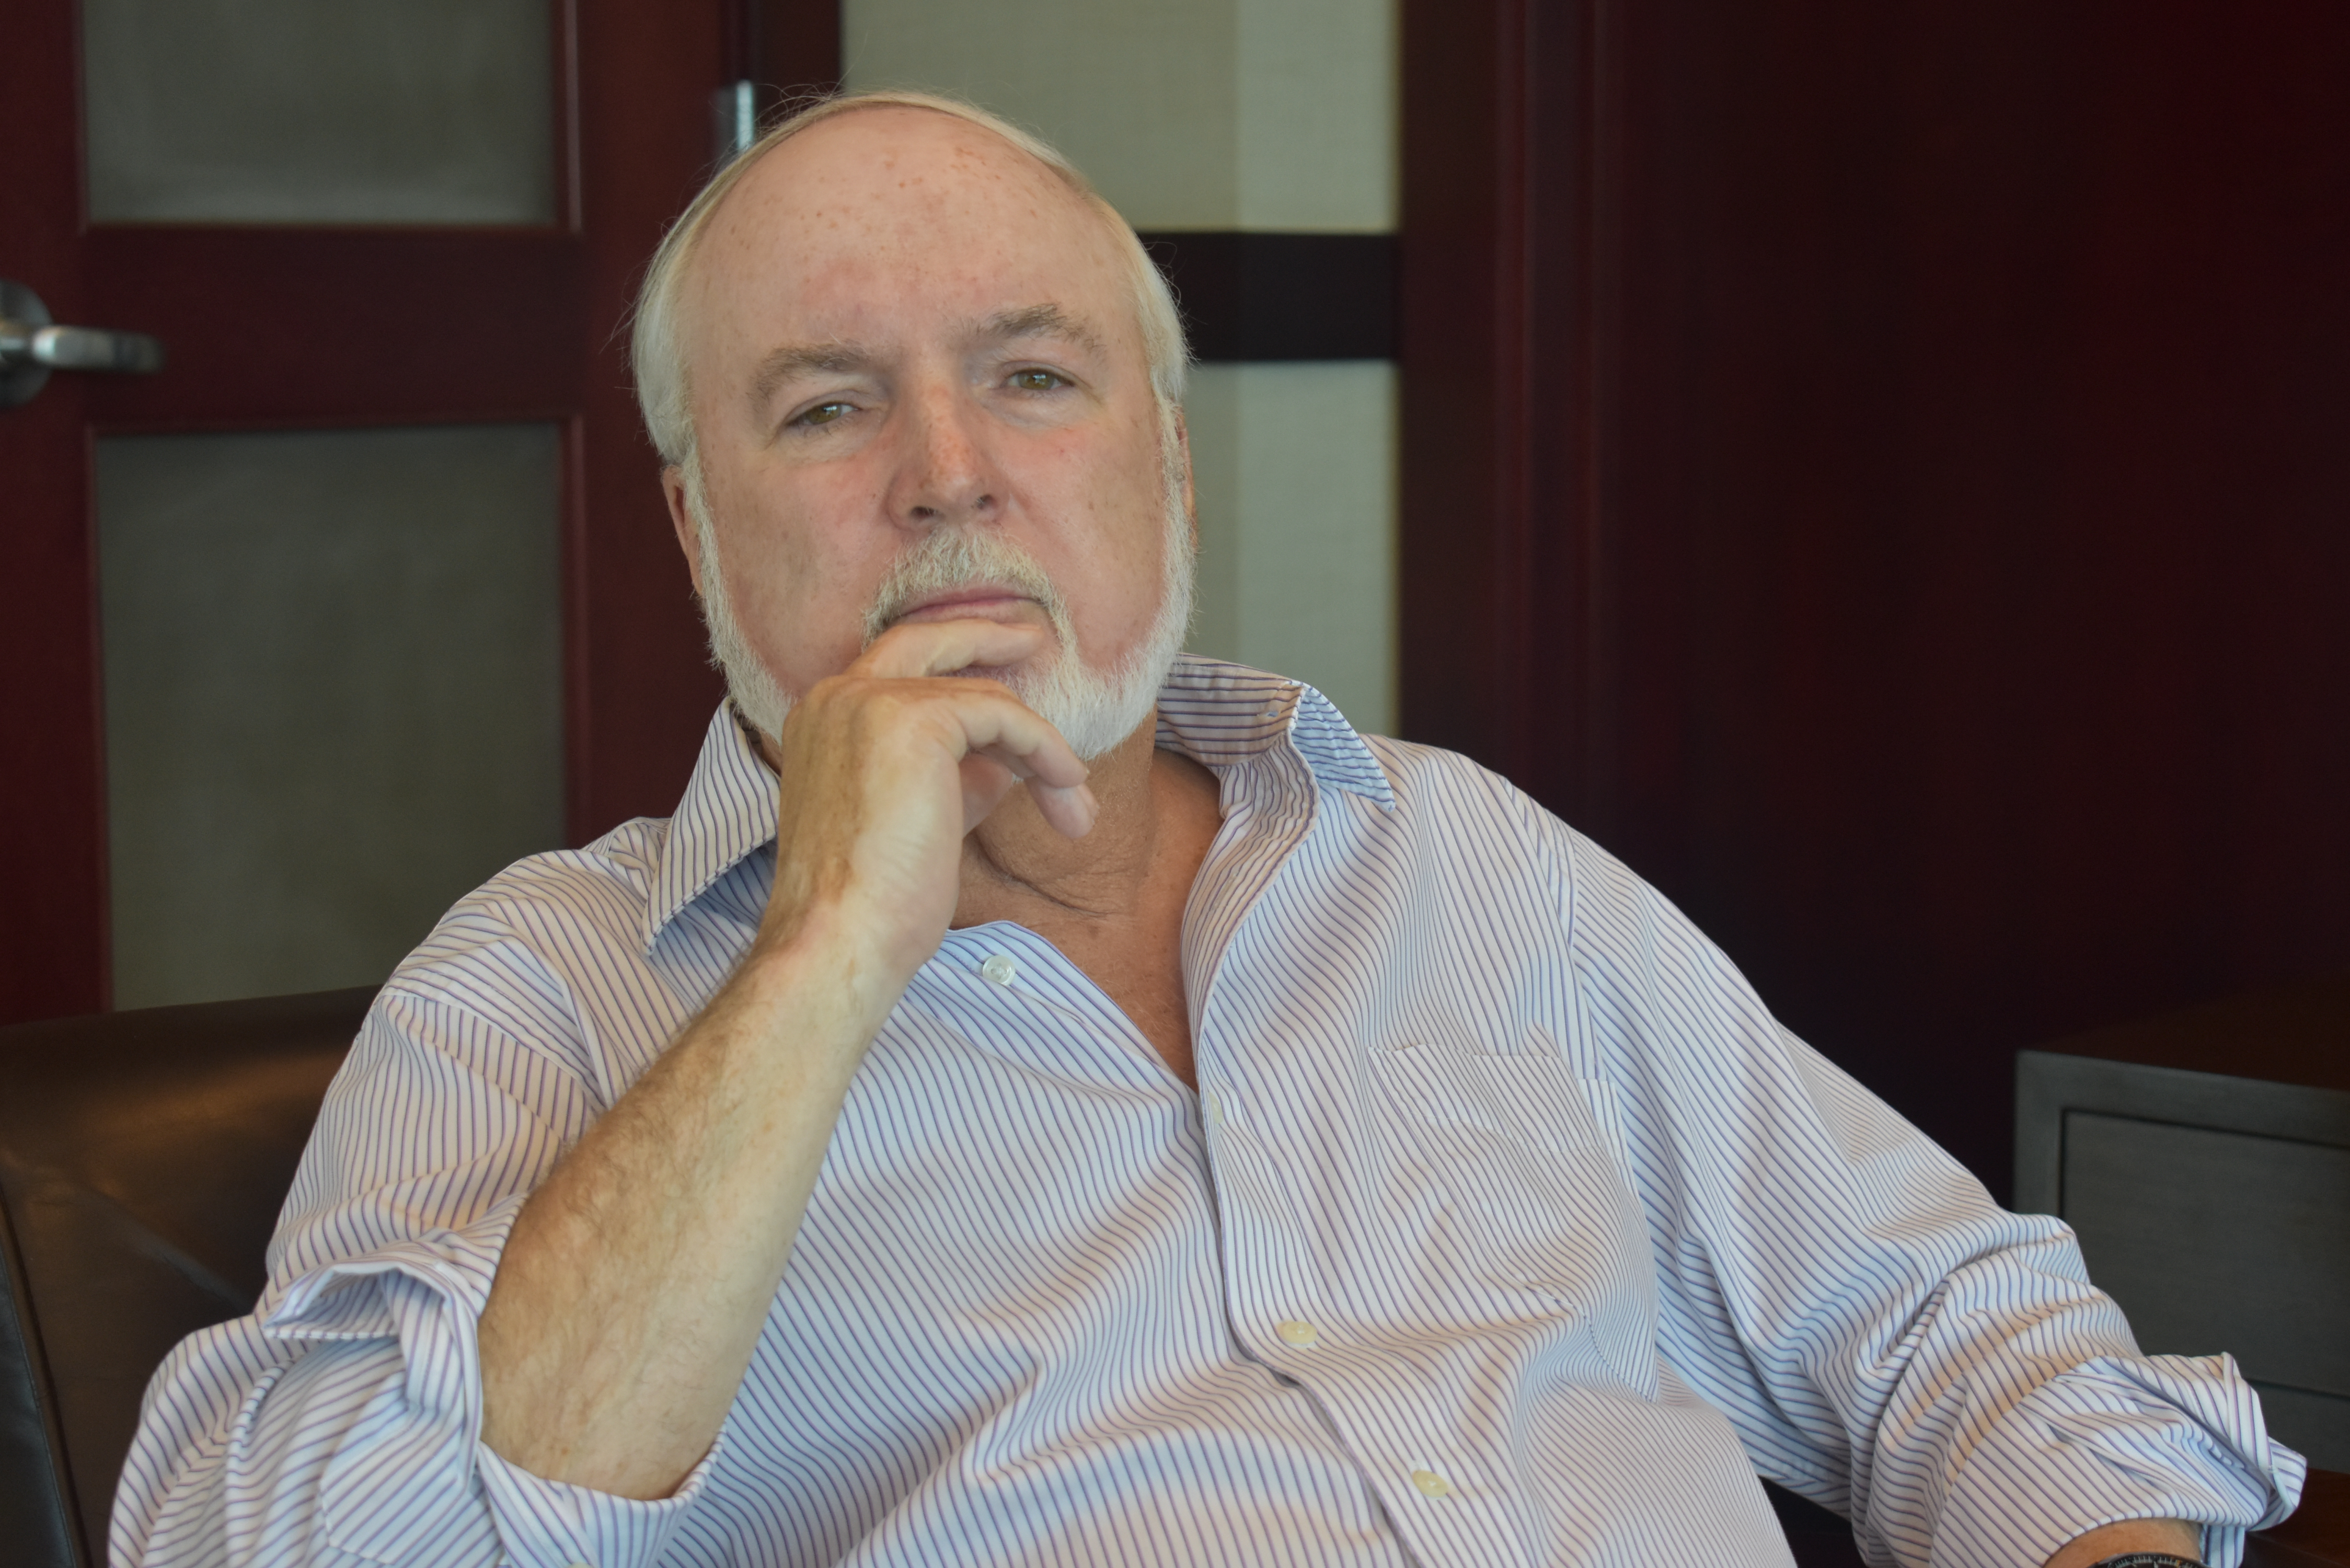 Carlos Pellas Solución a crisis de Nicaragua pasa “por adelanto de